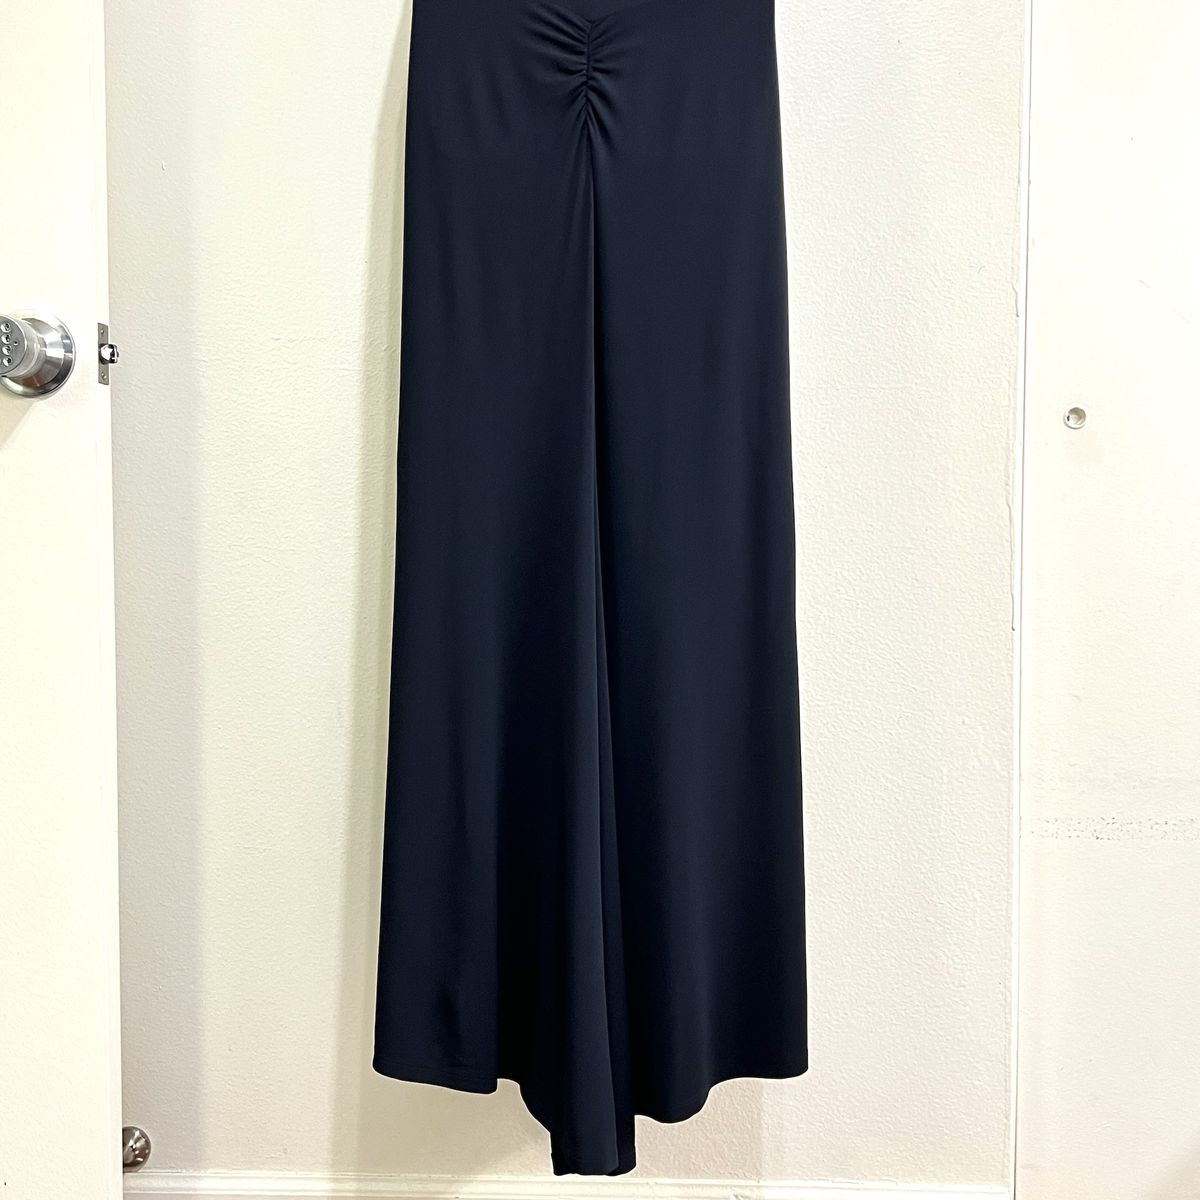 Style Reze Chain Link Veronica Beard Size 12 Halter Navy Blue Side Slit Dress on Queenly